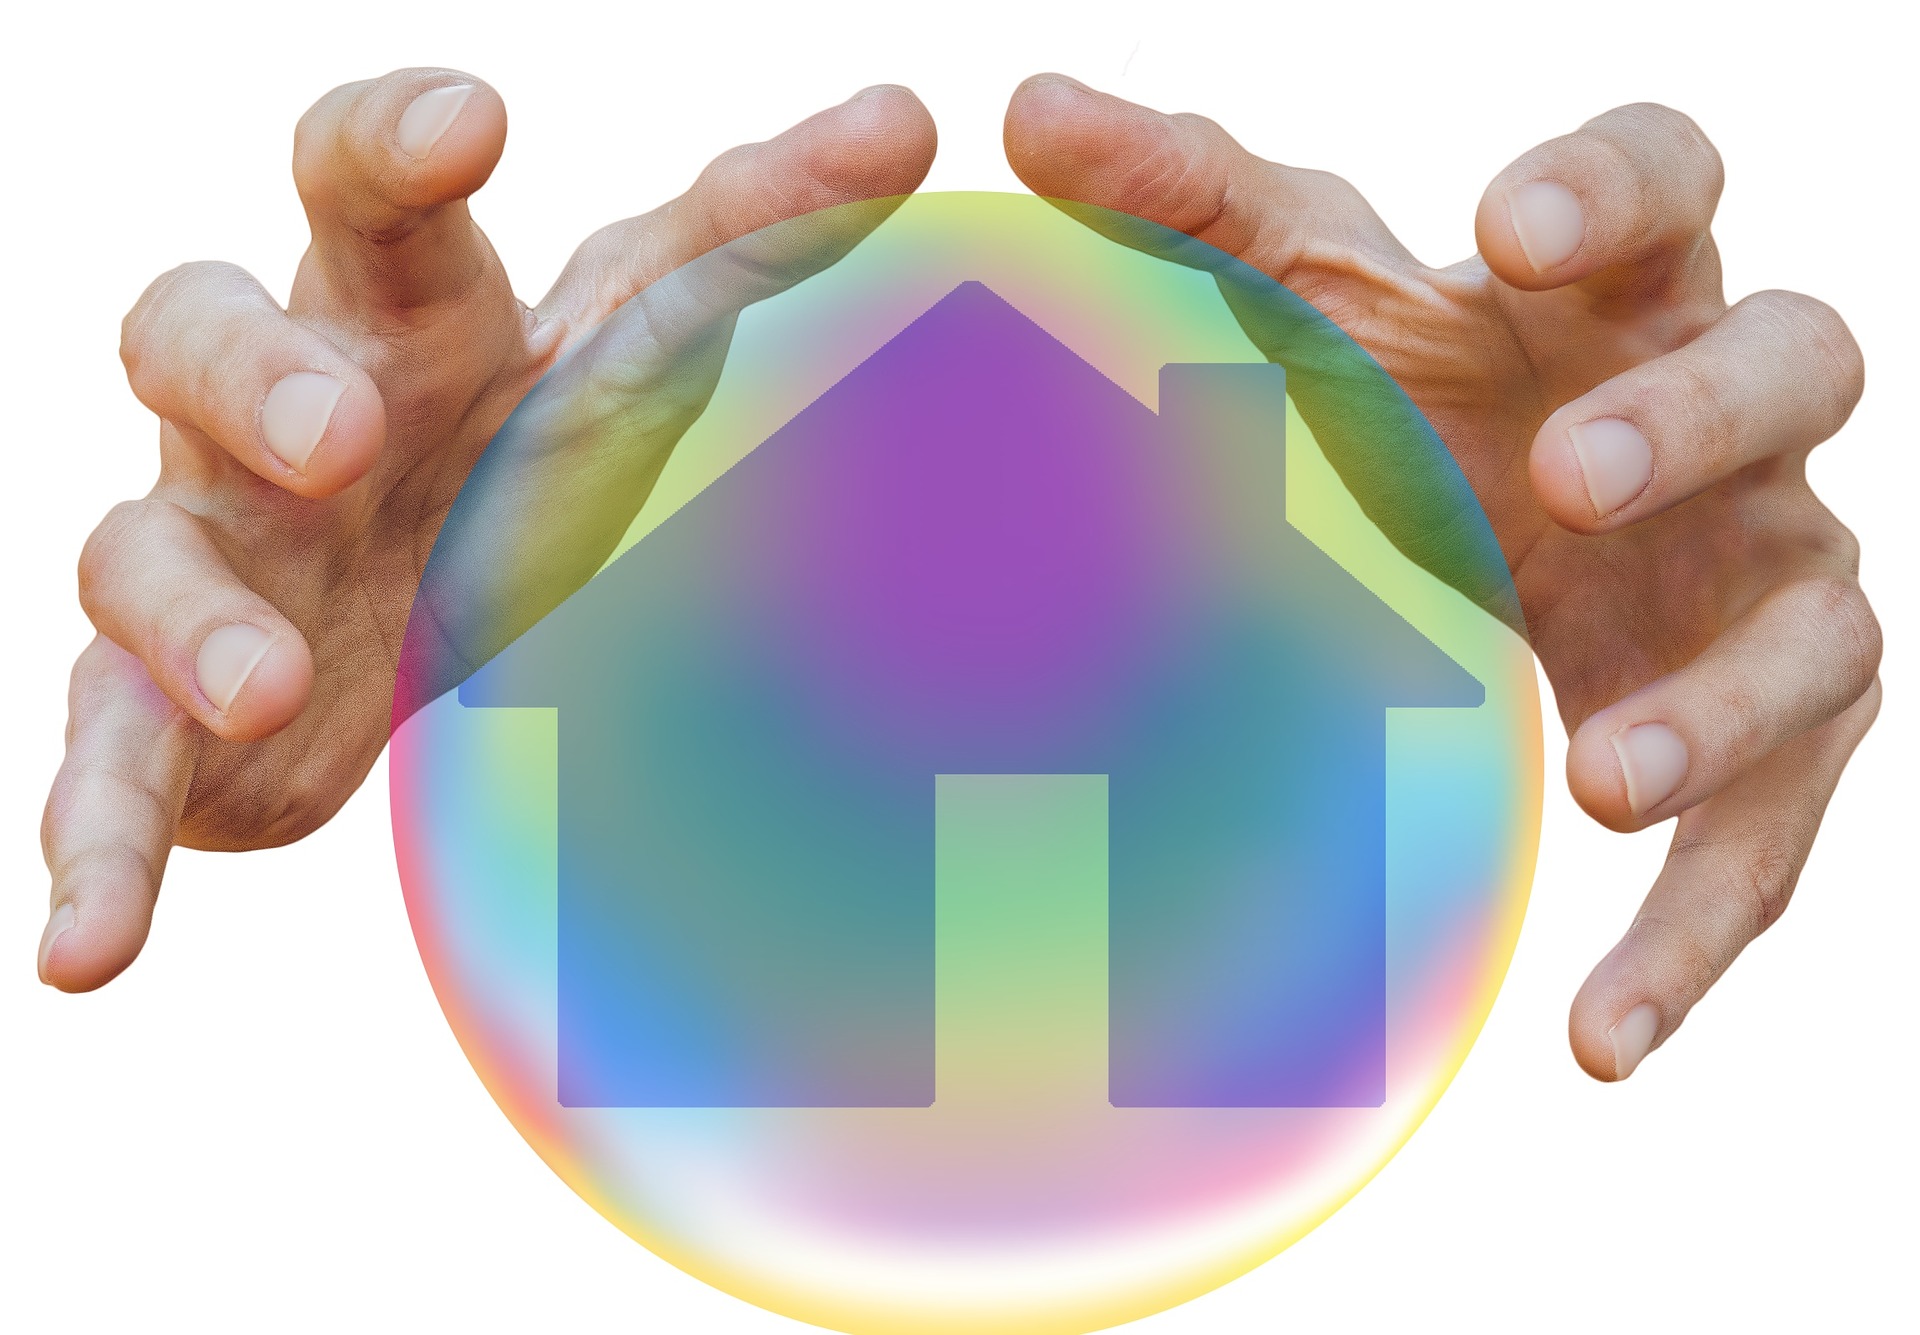 housing bubble - stable housing market